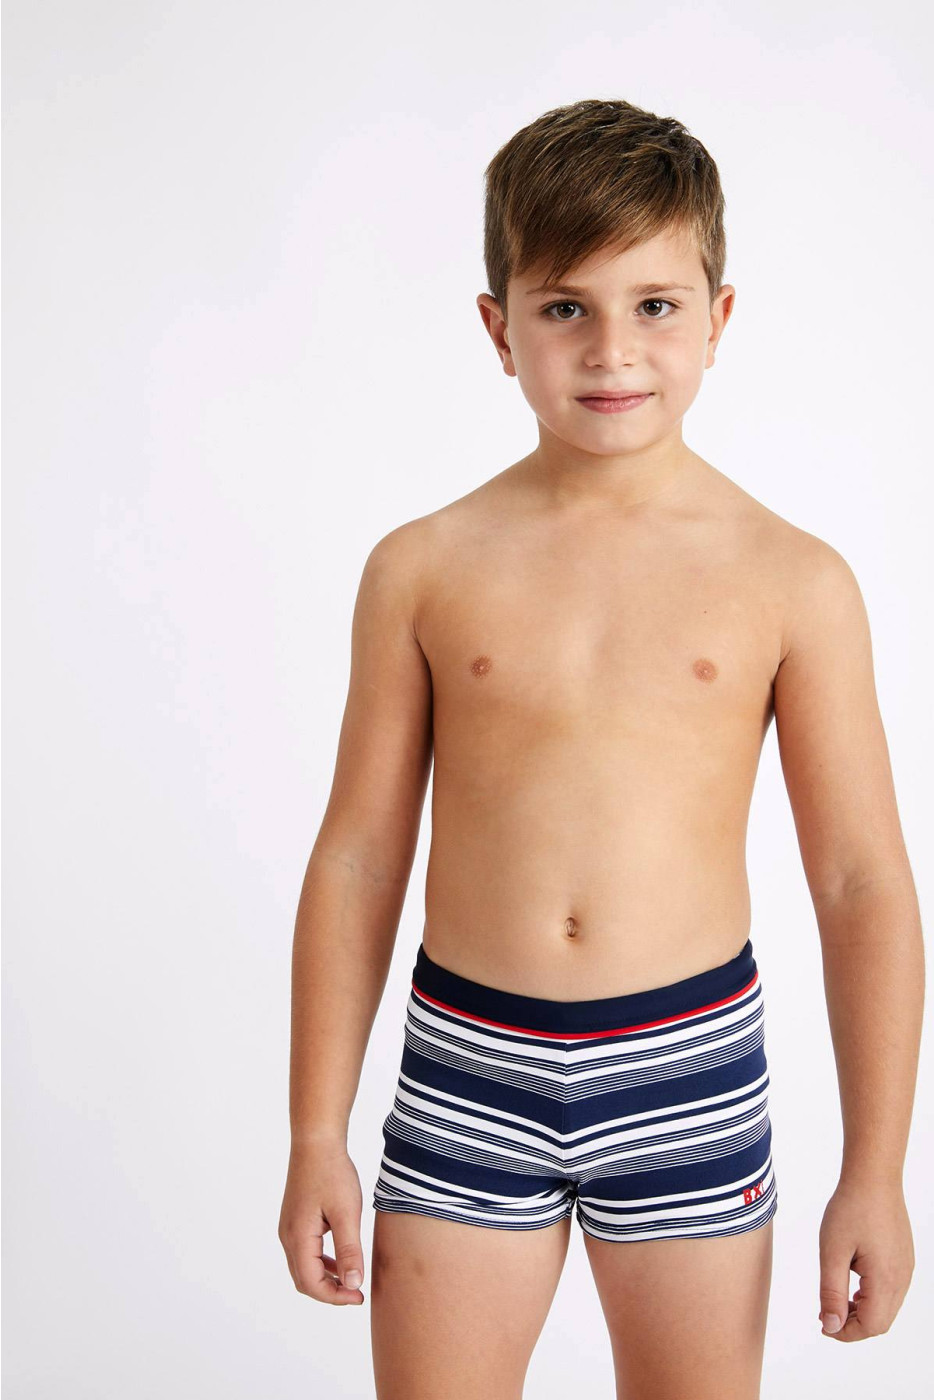 Child's Swimsuit | Boys Swimsuit | Child's Trunks | M CORY HAYWARD ...